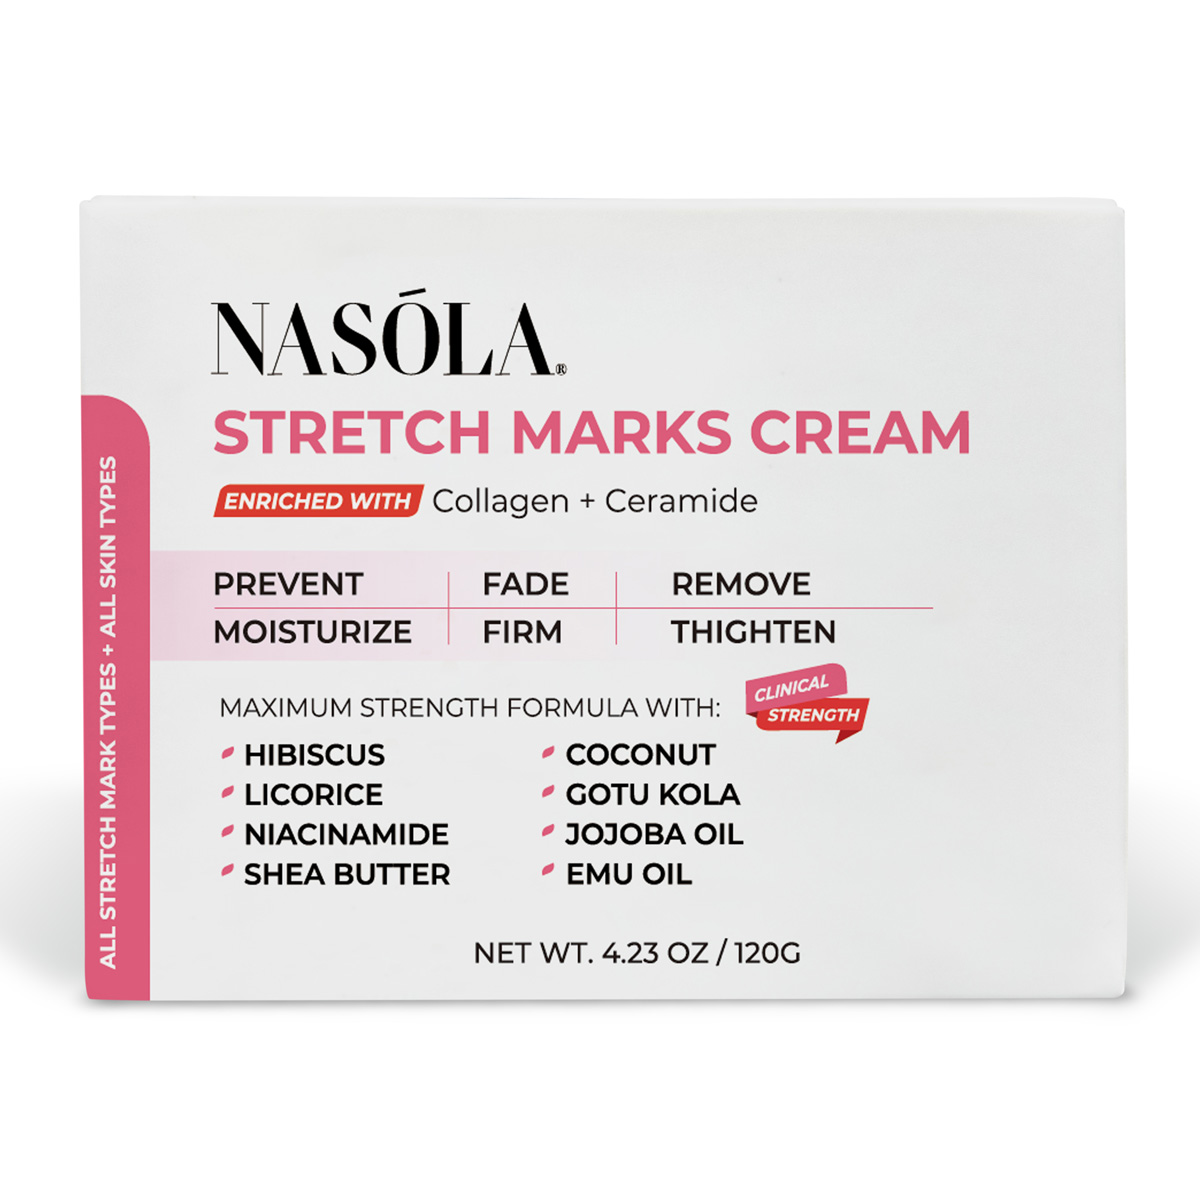 Best Stretch Mark Cream